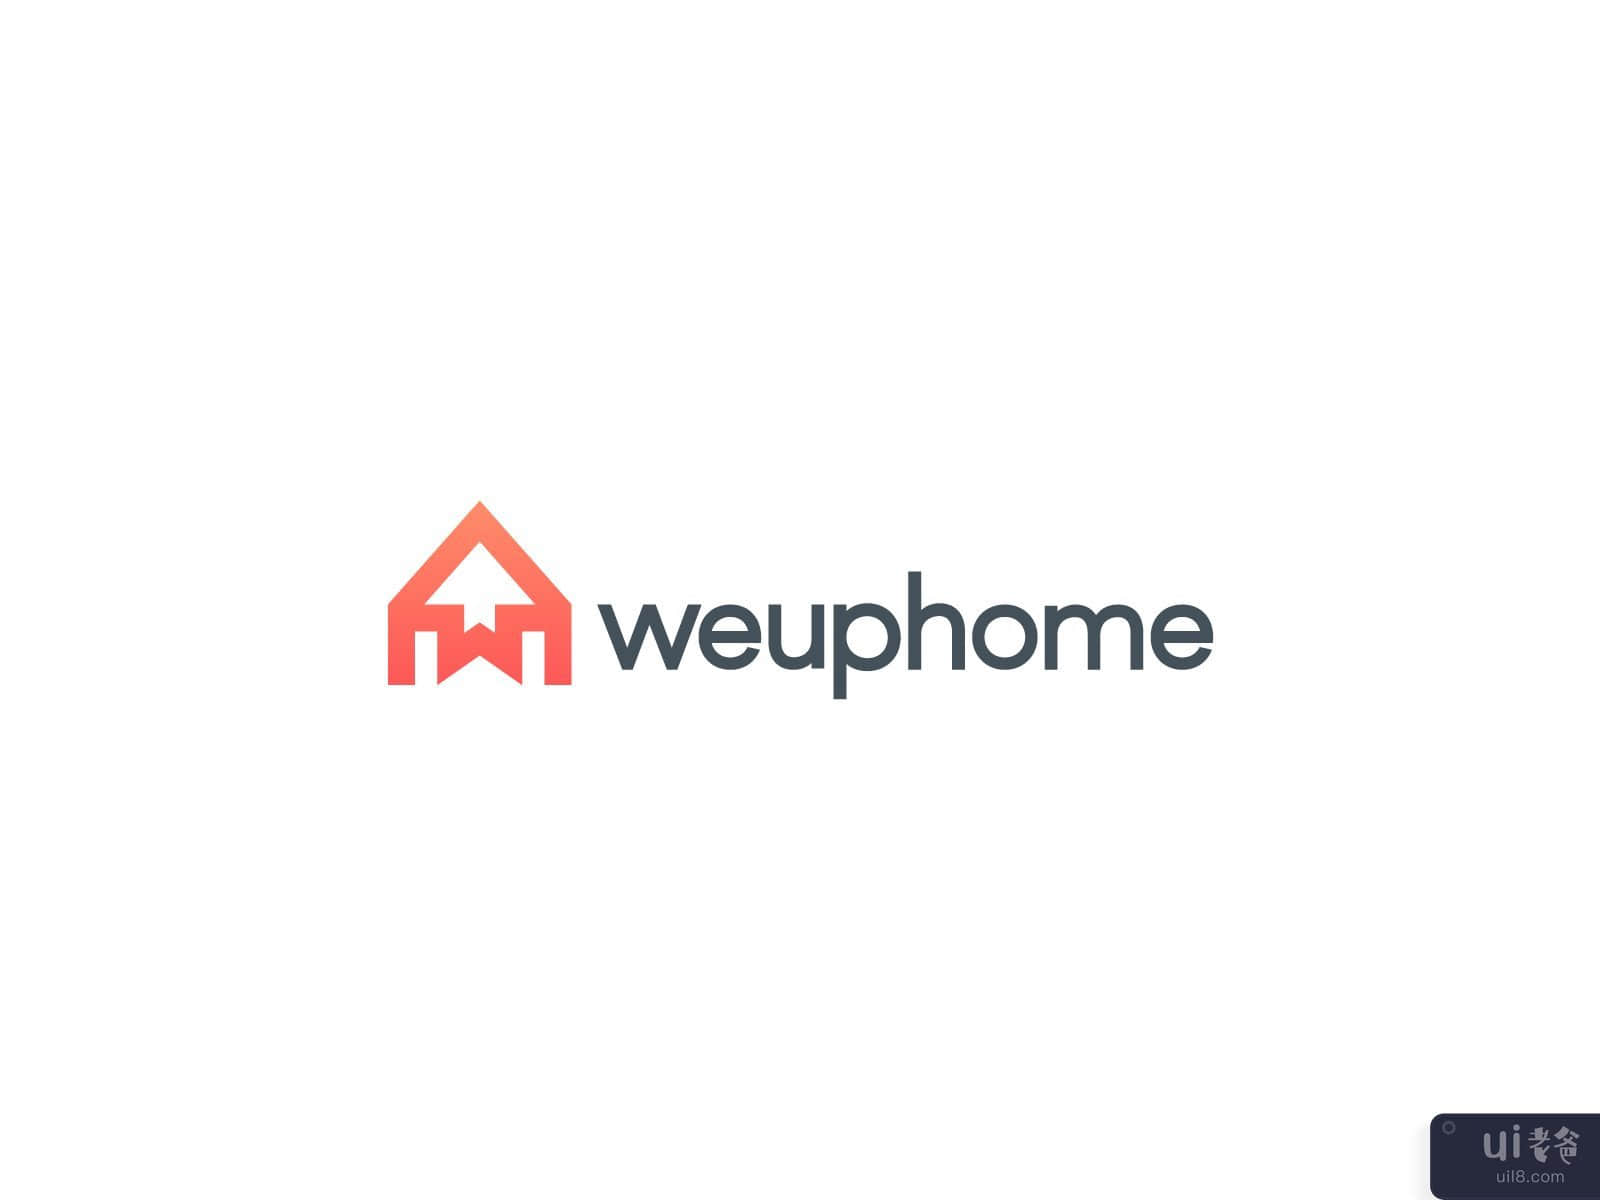 Weuphome - 房地产标志品牌(Weuphome - Real Estate Logo Branding)插图1